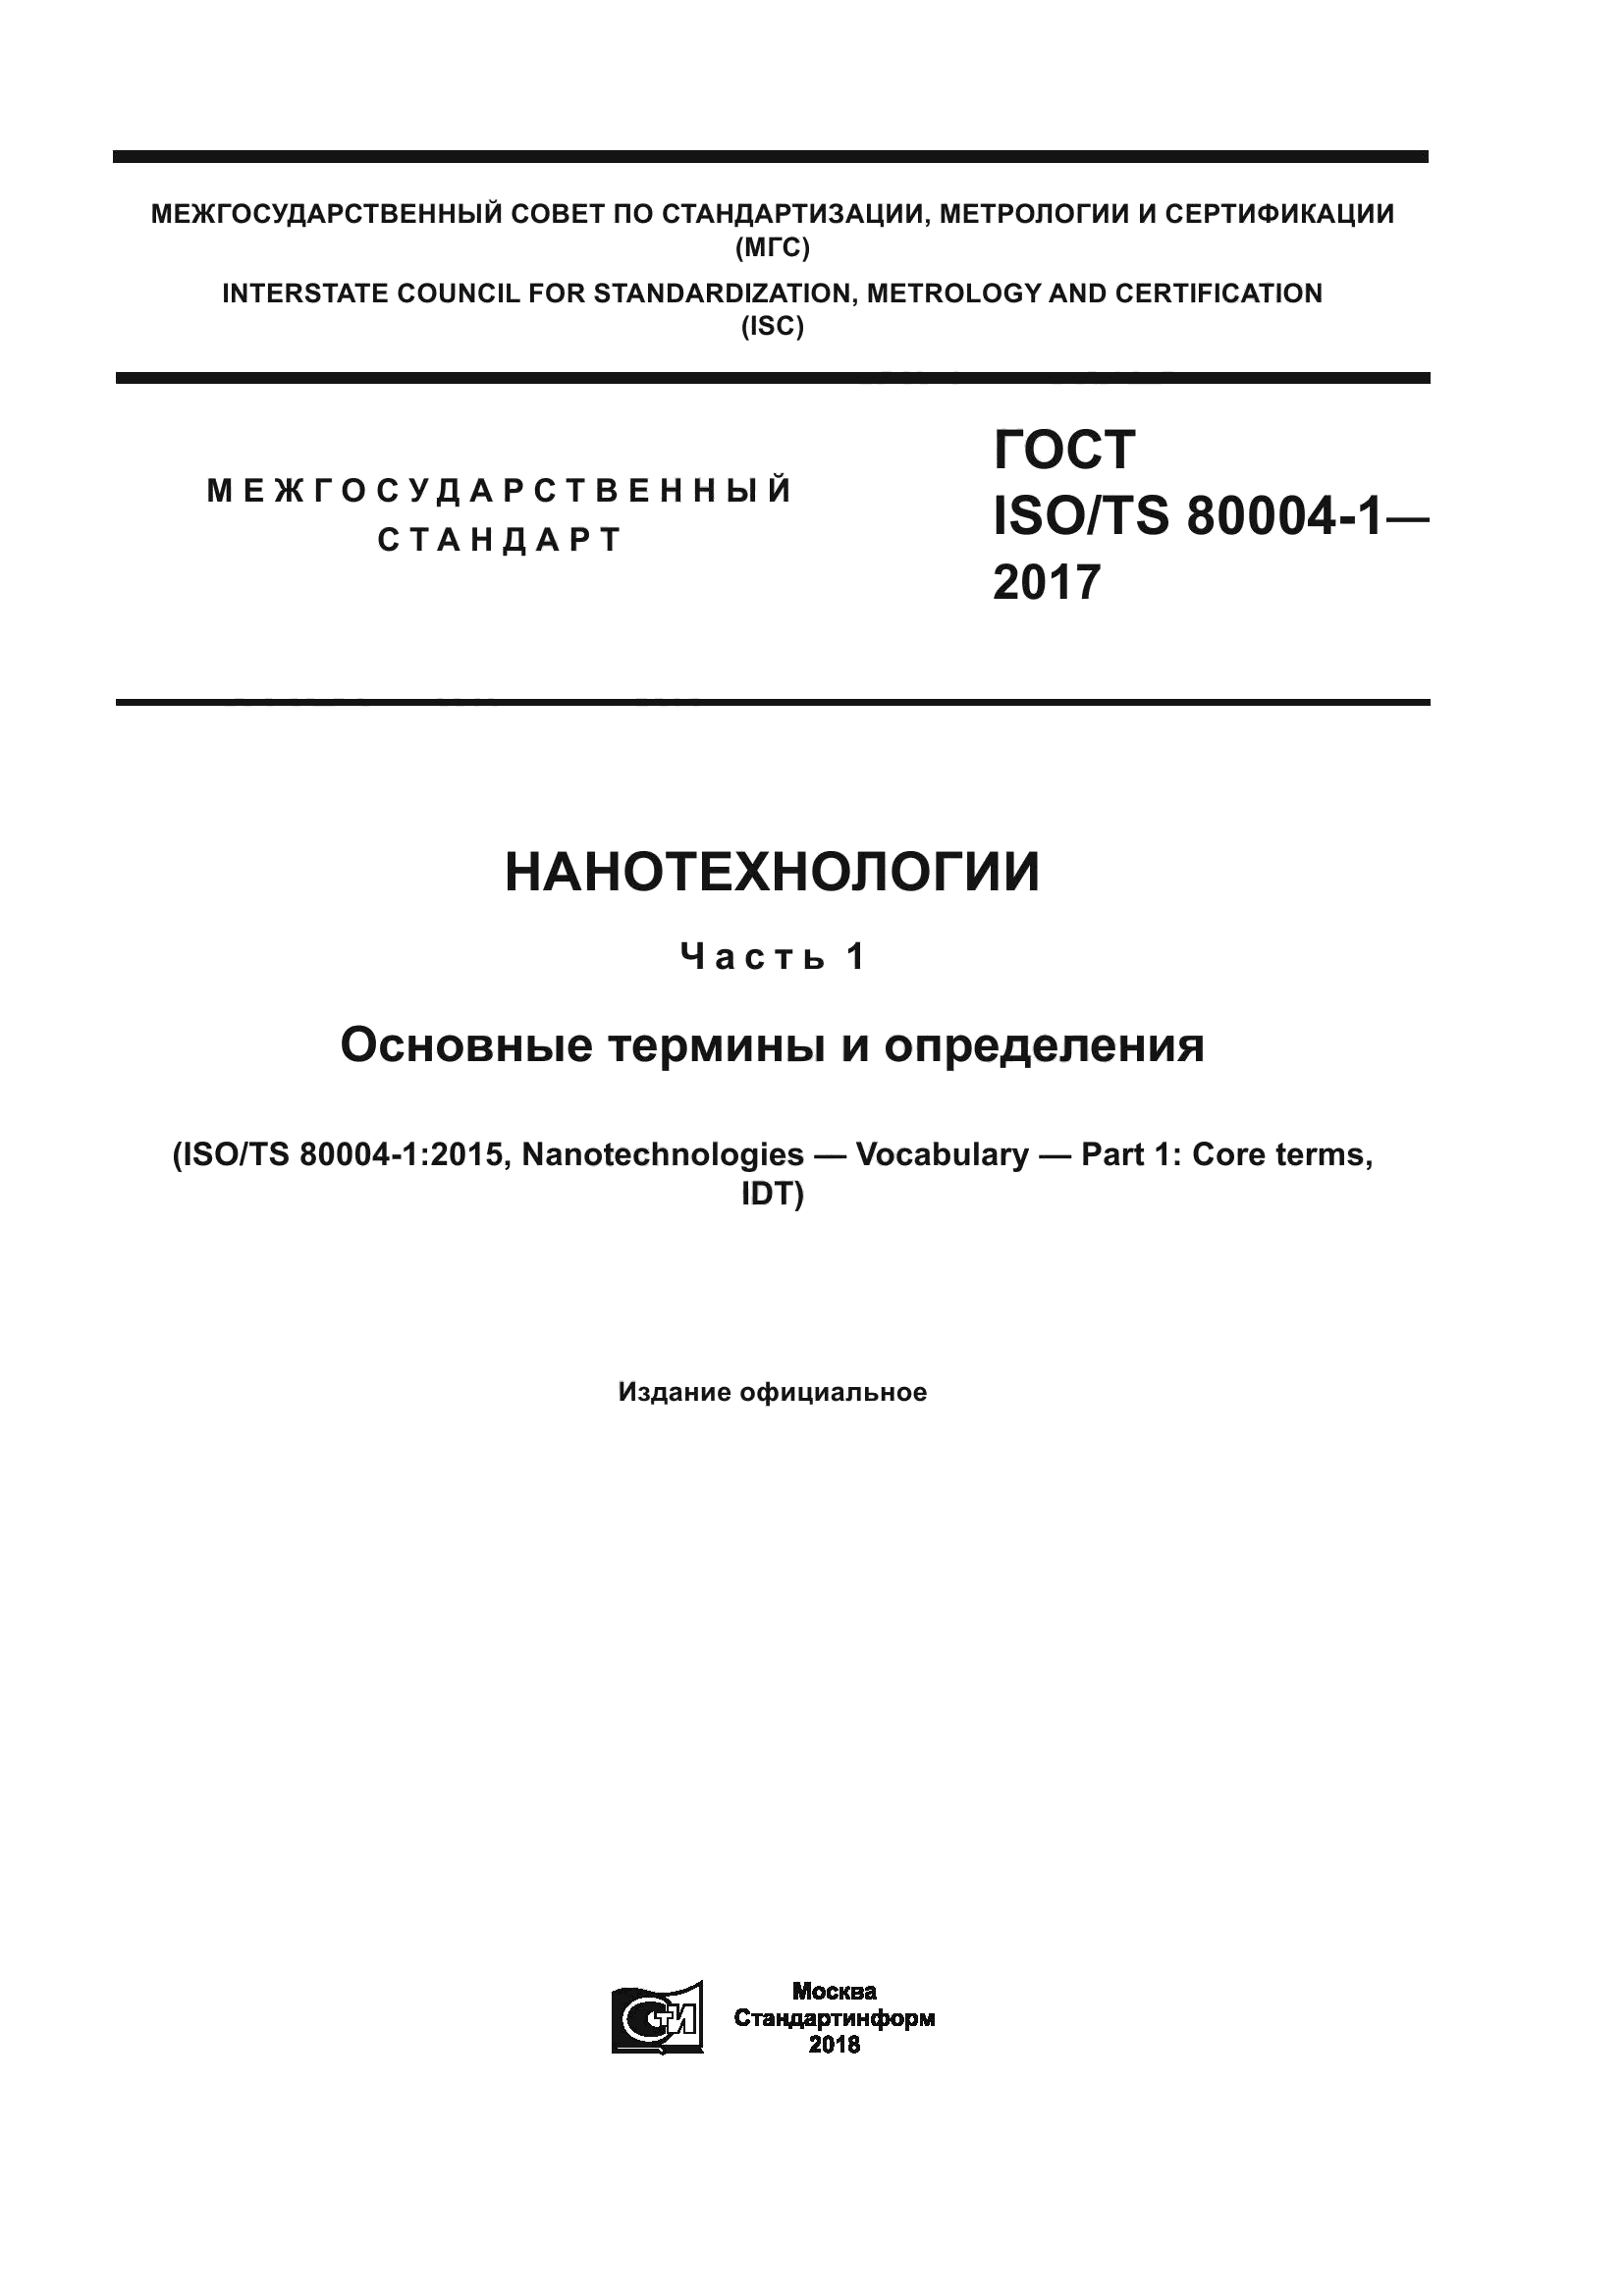 ГОСТ ISO/TS 80004-1-2017